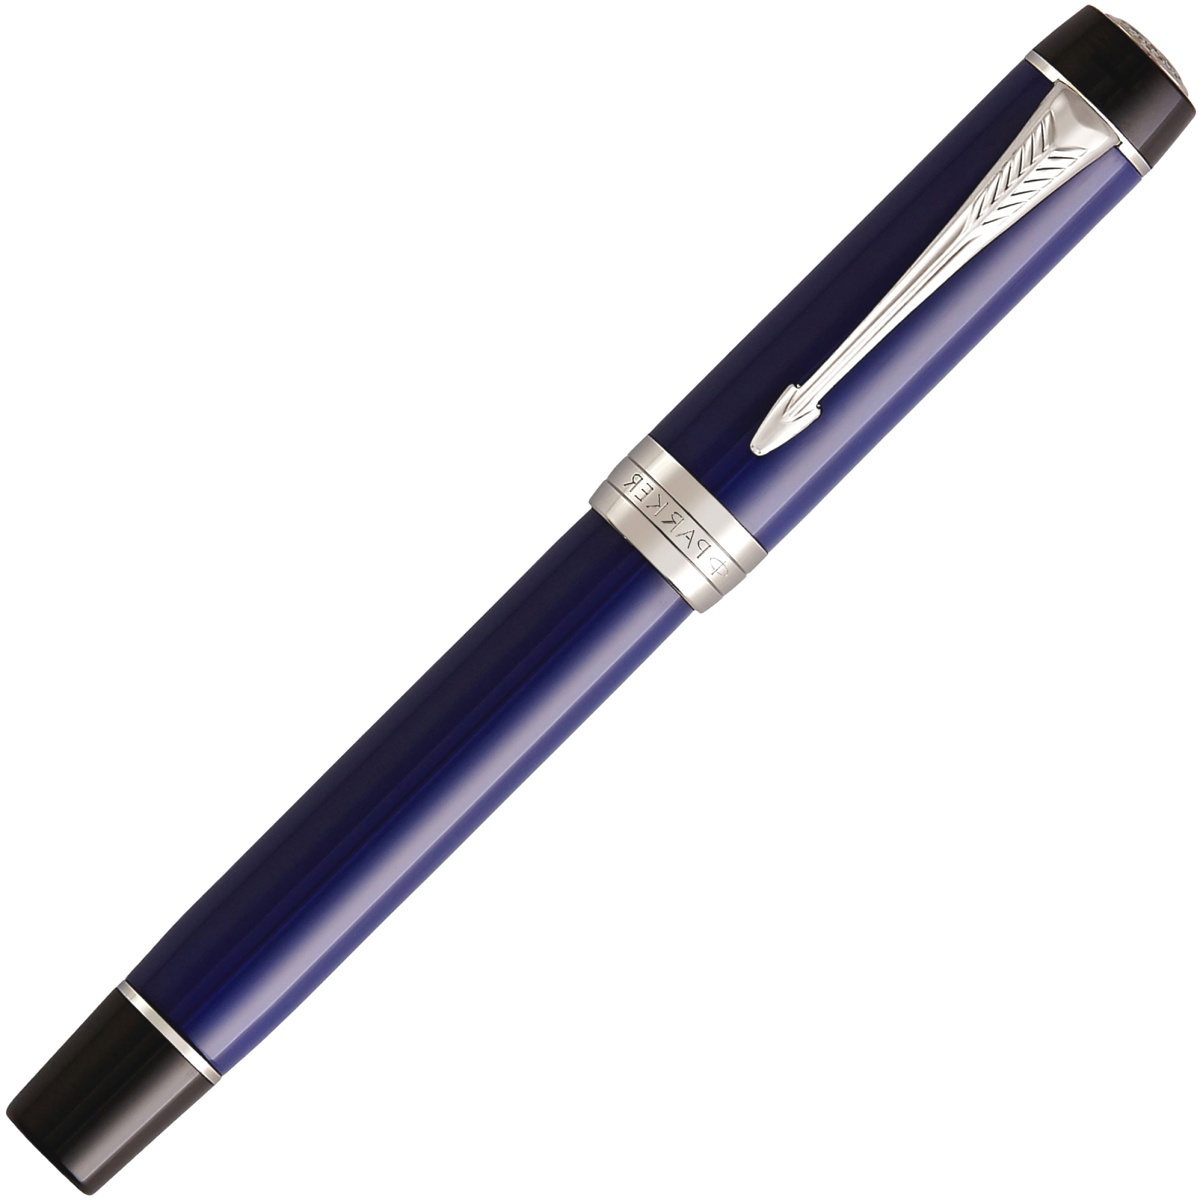  Перьевая ручка Parker Duofold Classic Centennial F77, Blue and Black CT (Перо F), фото 2